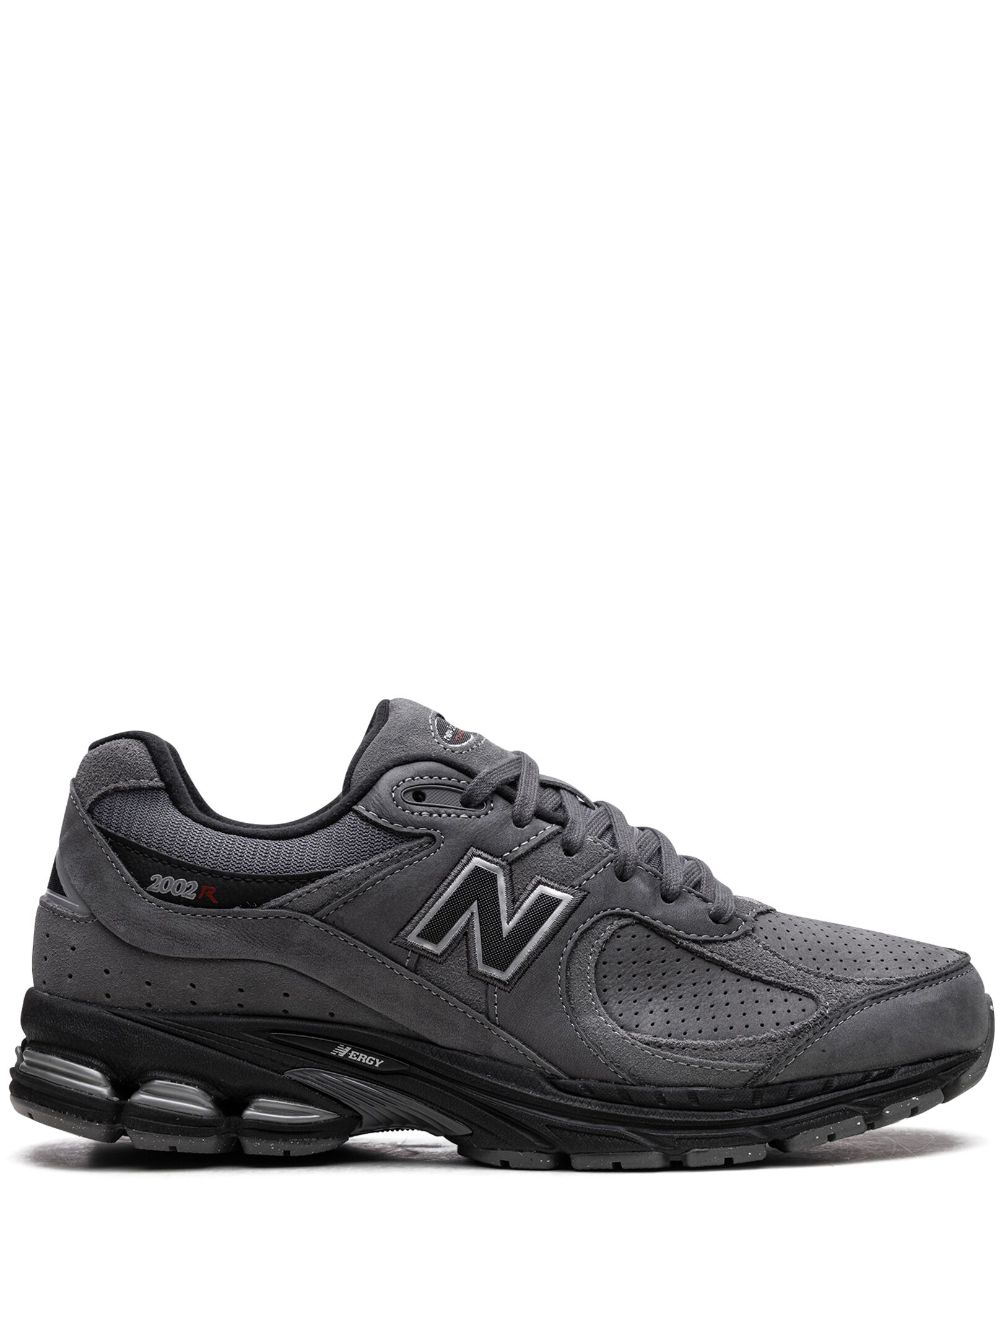 New Balance 2002R "Castlerock / Black" leather sneakers - Grey